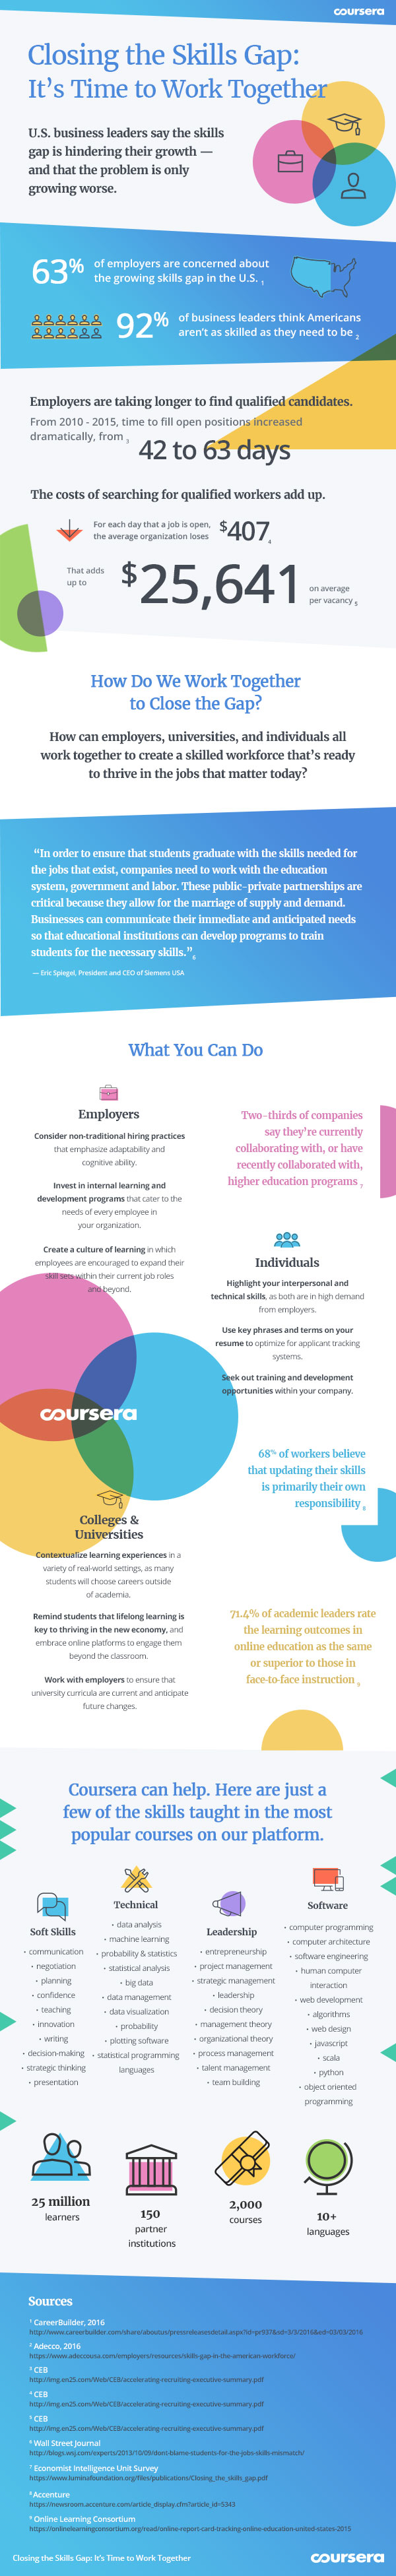 coursera-infographic_FINAL-32317.jpg